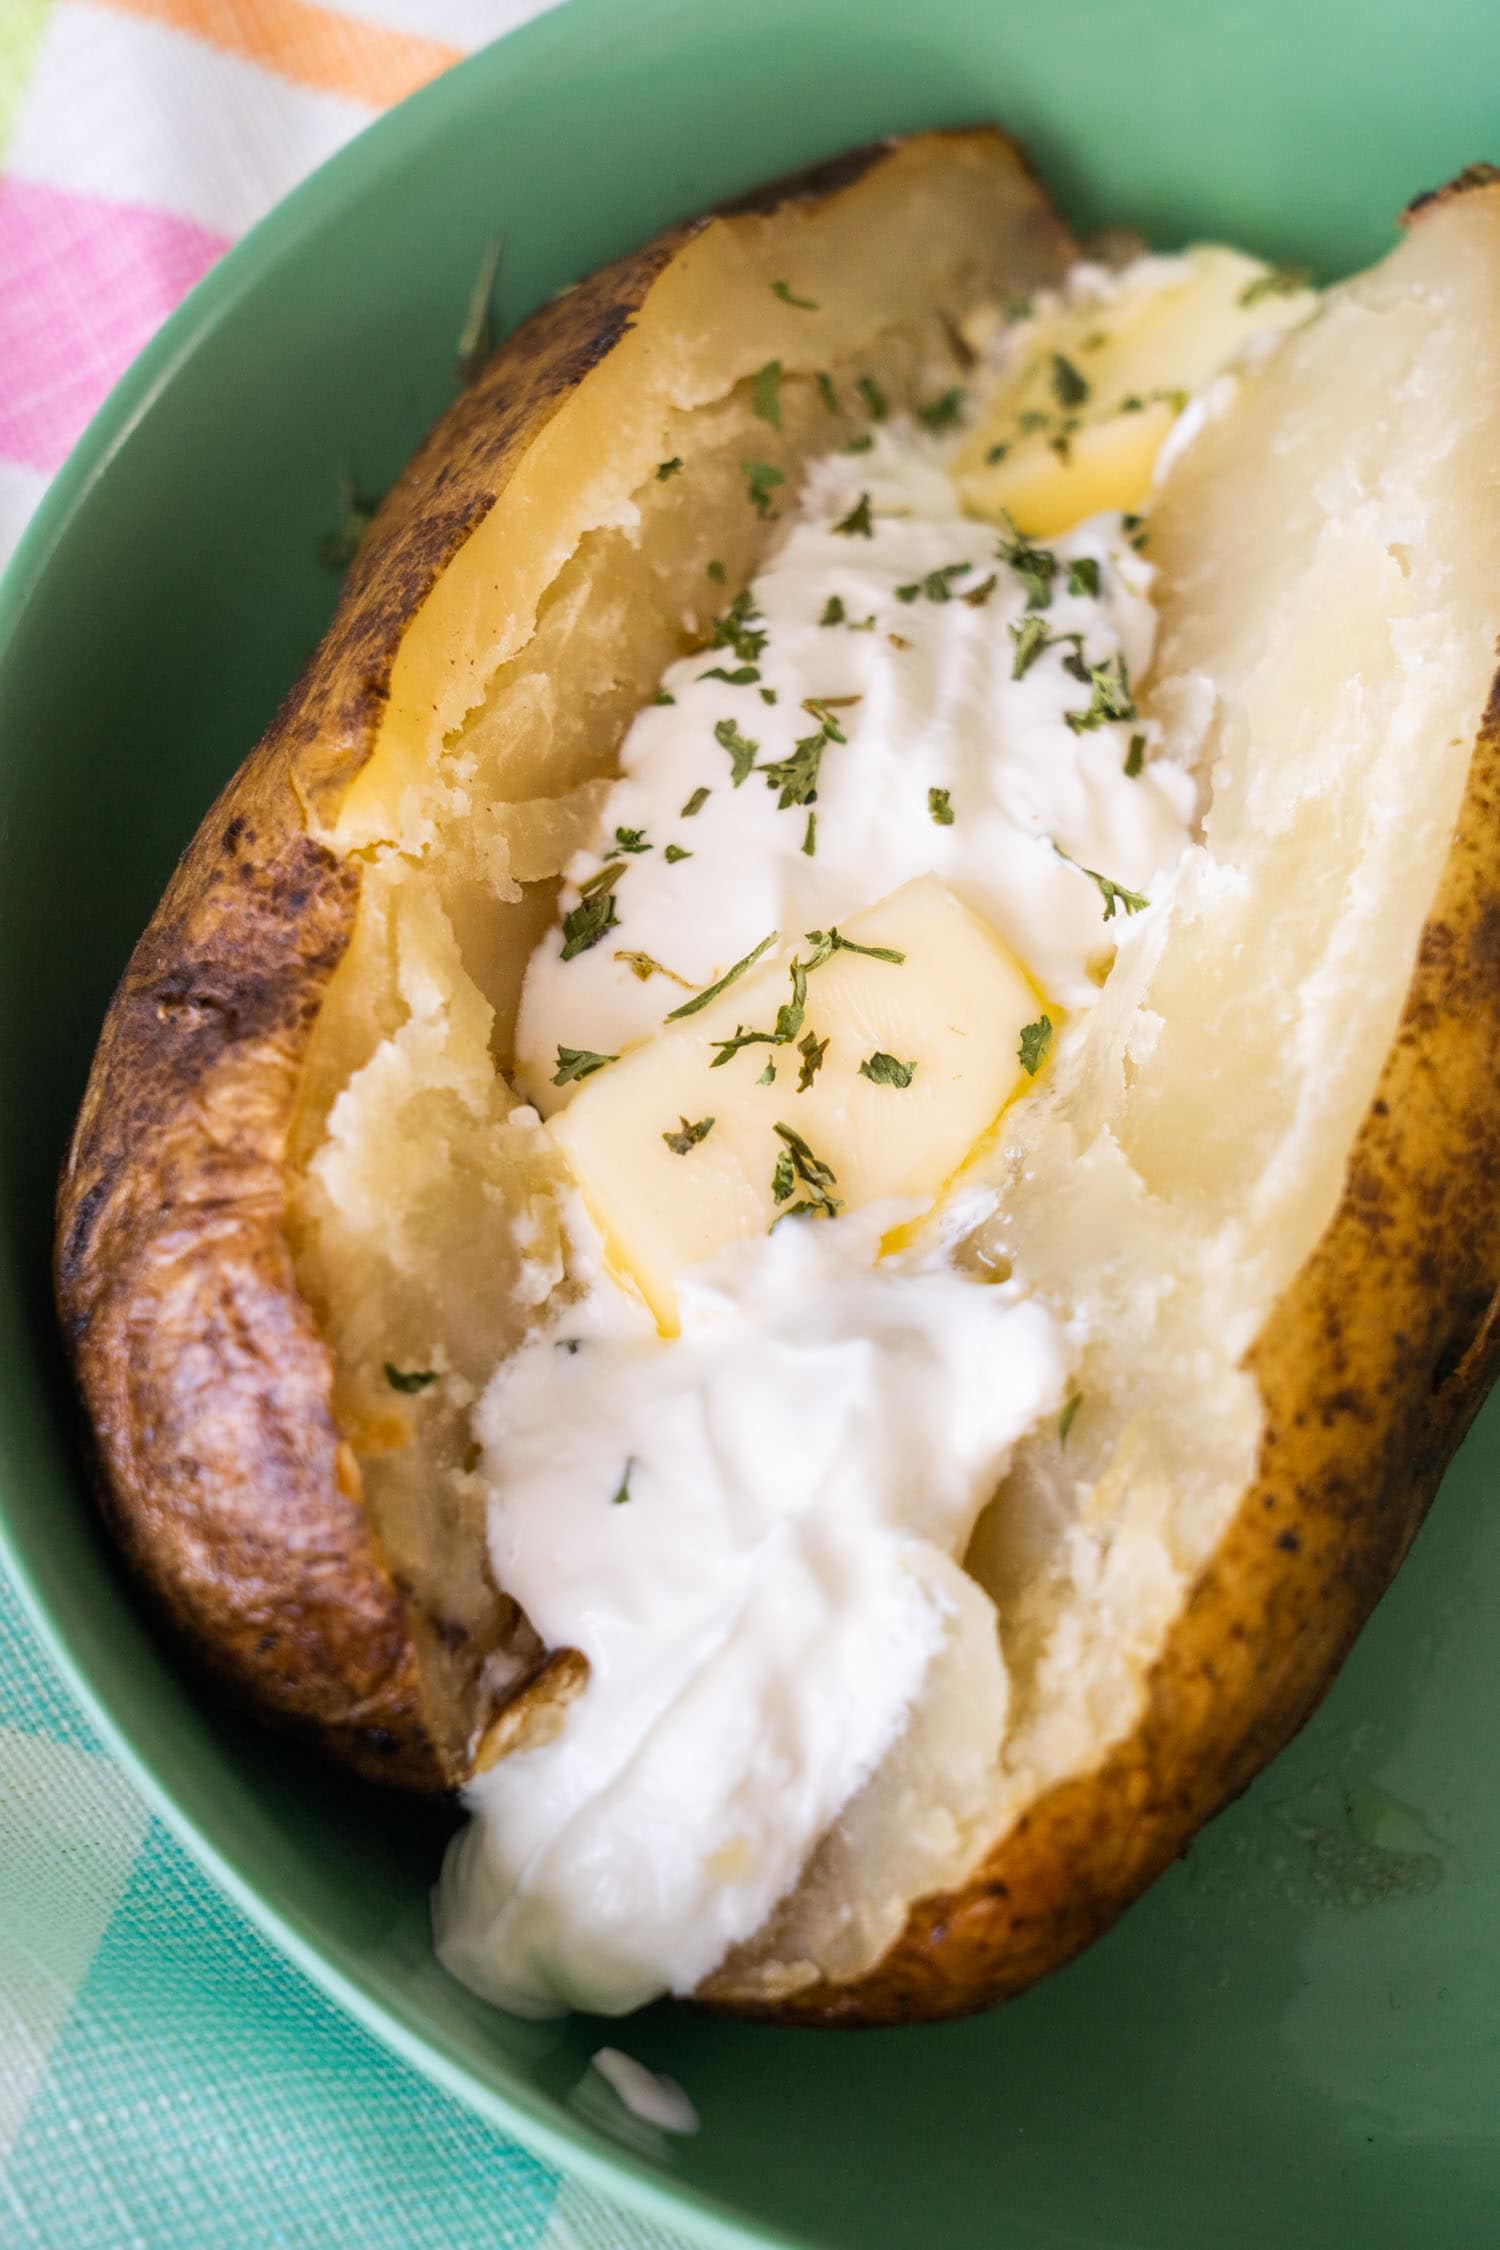 How to Make Crock Pot Baked Potatoes –